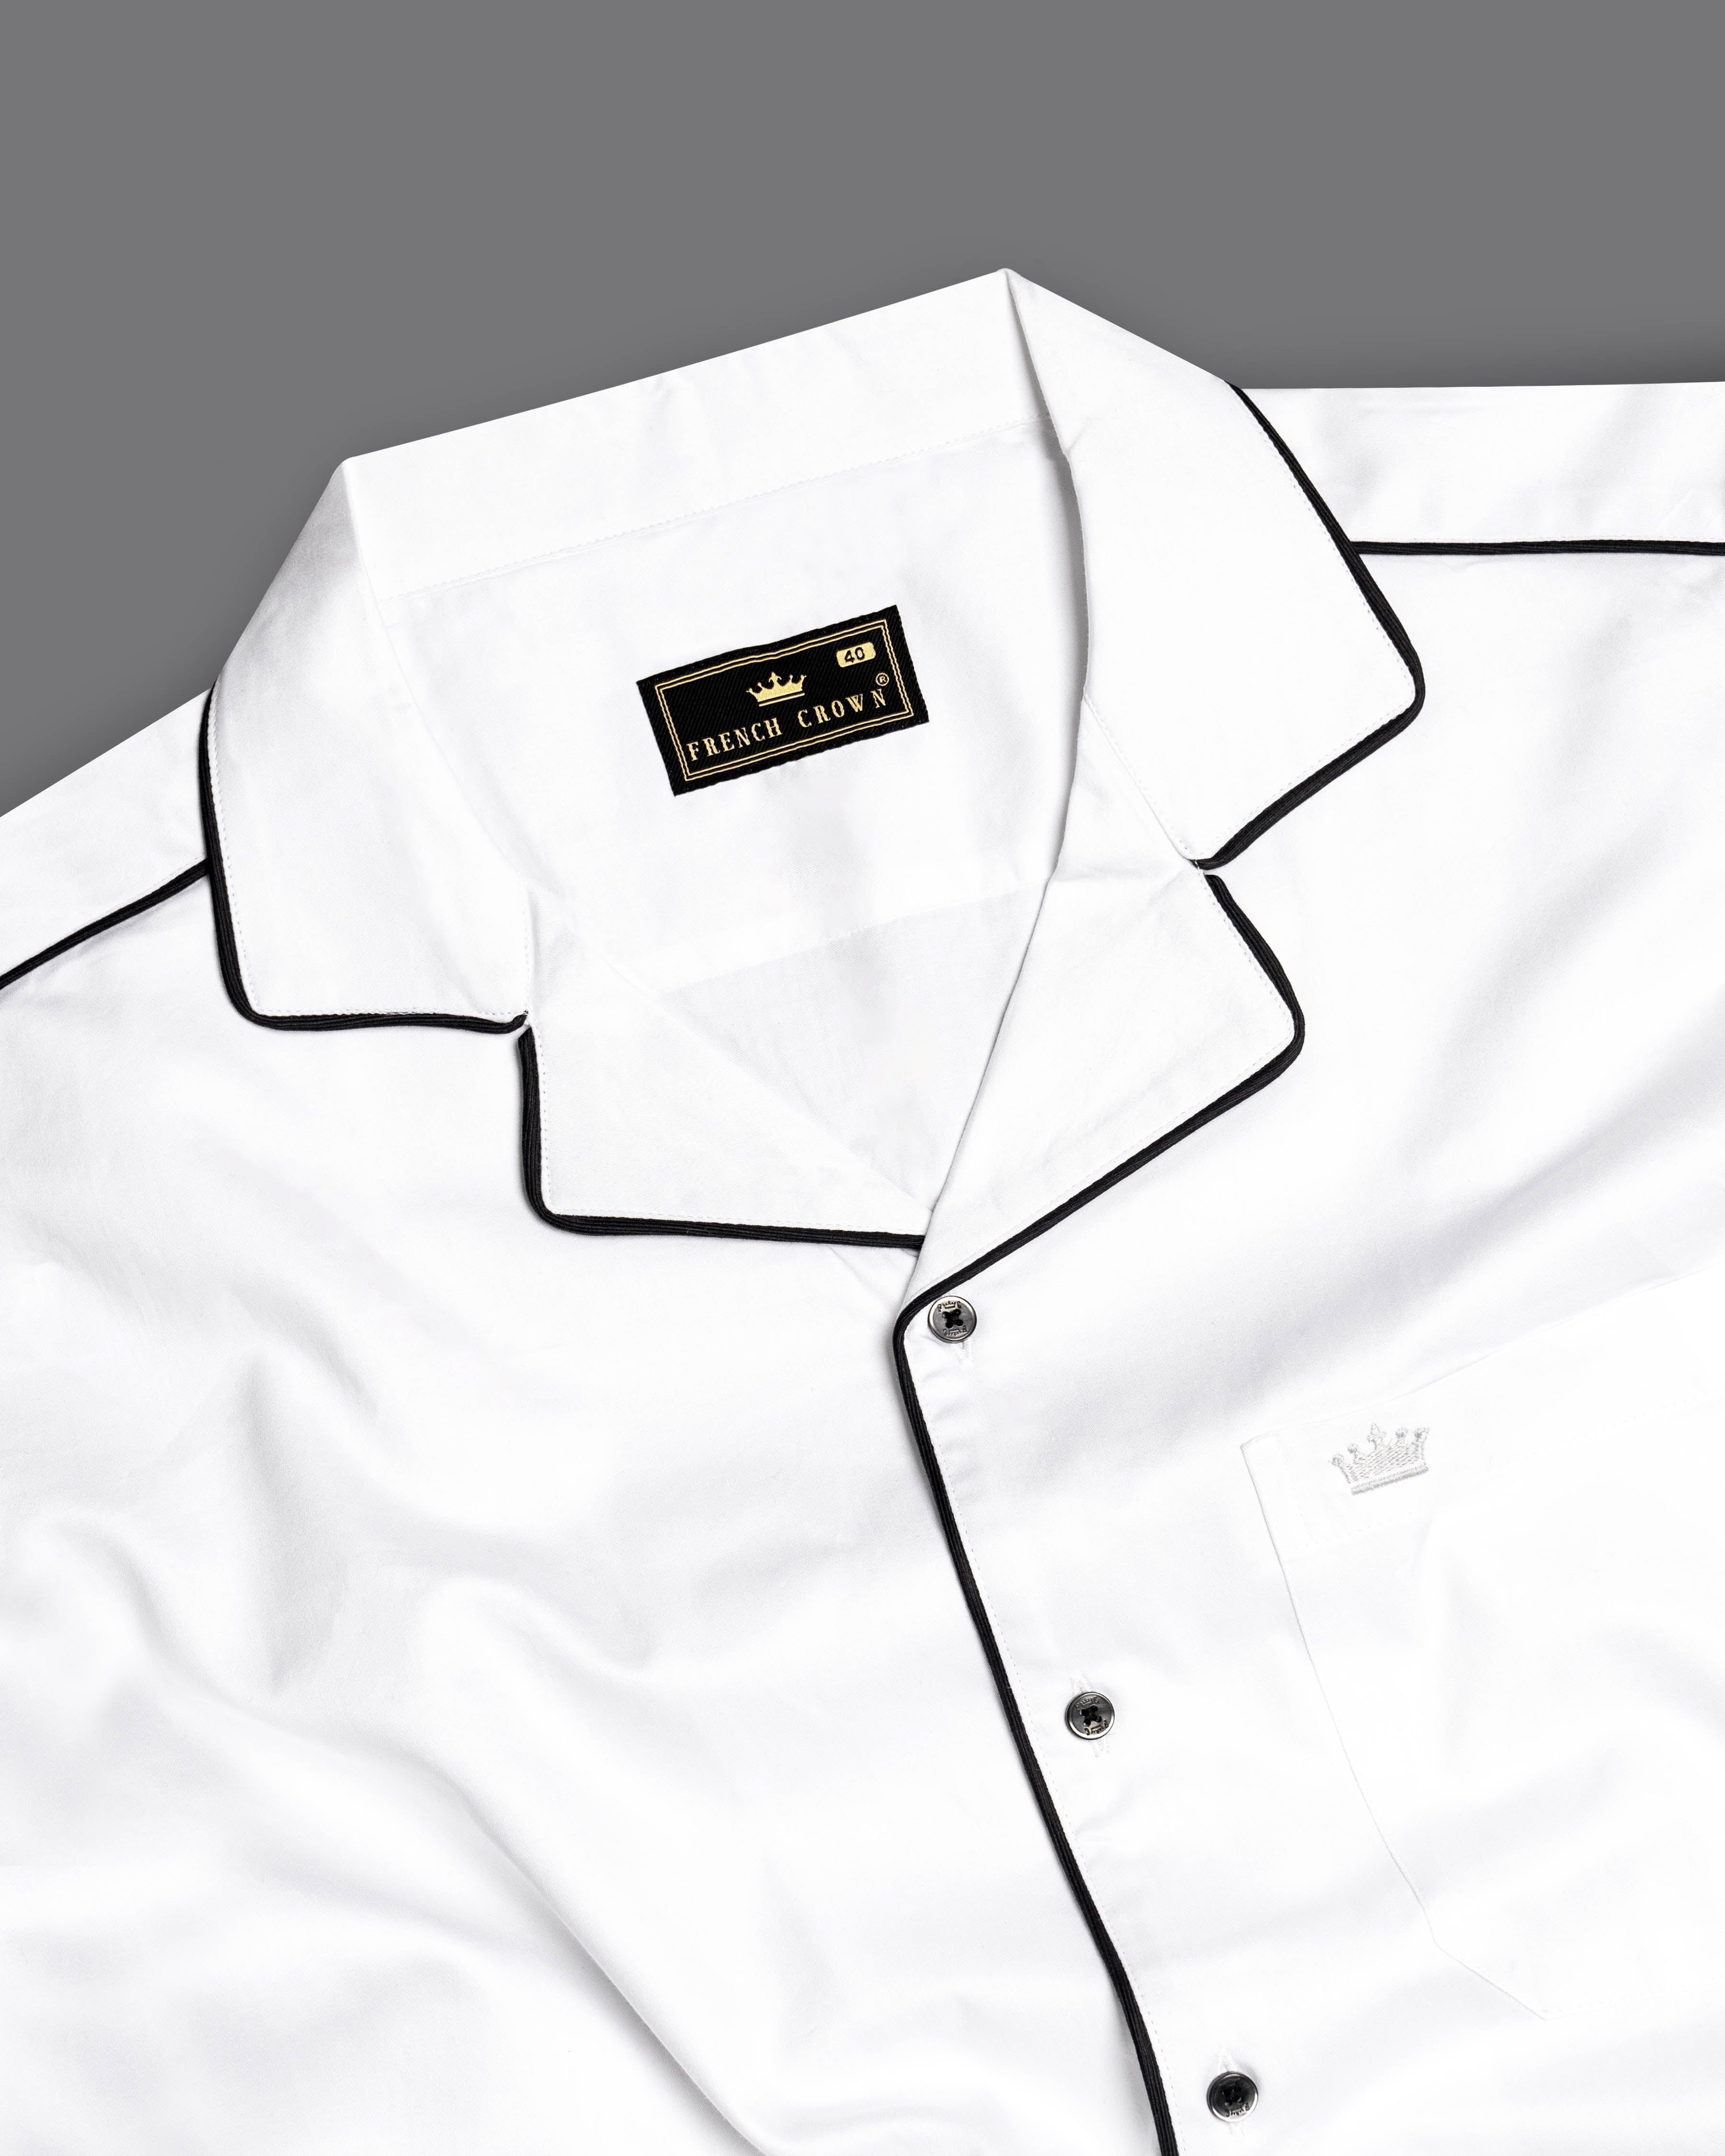 Bright White with Black Piping Work Super Soft Premium Cotton Designer Shirt 9551-CC-BLK-P485-38,9551-CC-BLK-P485-H-38,9551-CC-BLK-P485-39,9551-CC-BLK-P485-H-39,9551-CC-BLK-P485-40,9551-CC-BLK-P485-H-40,9551-CC-BLK-P485-42,9551-CC-BLK-P485-H-42,9551-CC-BLK-P485-44,9551-CC-BLK-P485-H-44,9551-CC-BLK-P485-46,9551-CC-BLK-P485-H-46,9551-CC-BLK-P485-48,9551-CC-BLK-P485-H-48,9551-CC-BLK-P485-50,9551-CC-BLK-P485-H-50,9551-CC-BLK-P485-52,9551-CC-BLK-P485-H-52